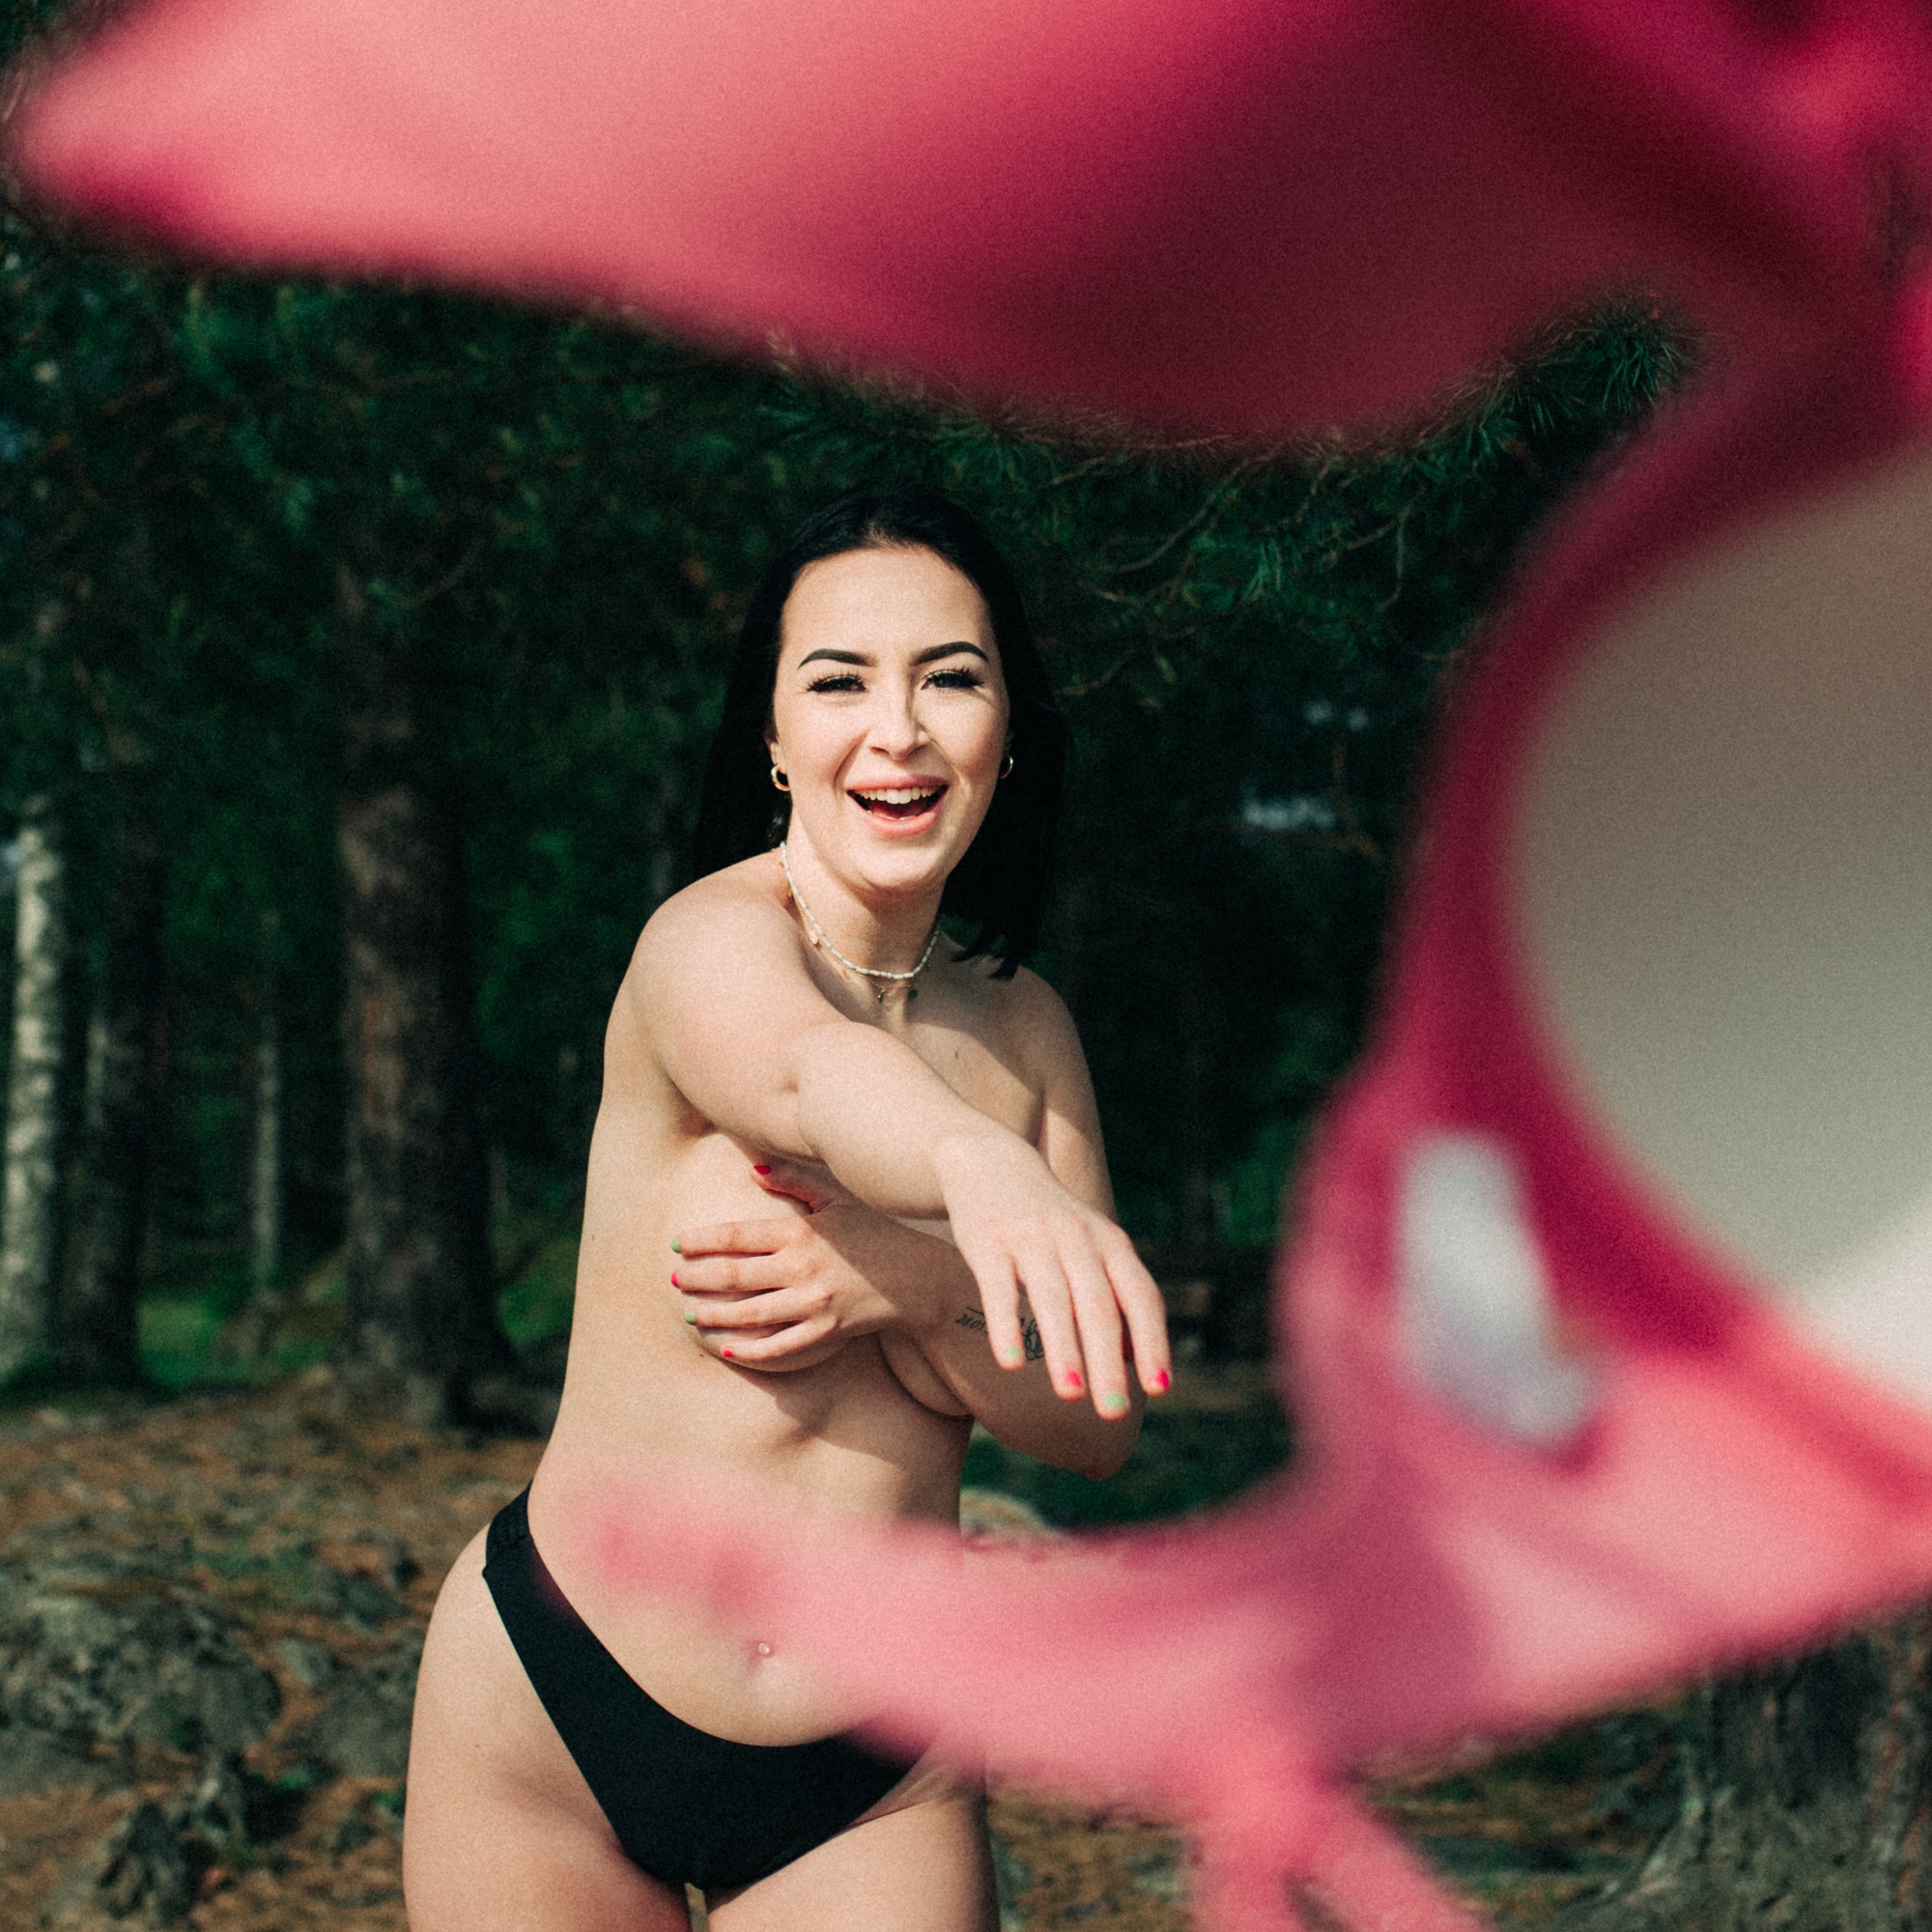 Maia (21) smiler stort mens hun kaster den rosa bikinitoppen mot kamera. Hun har venstre arm over brystene.